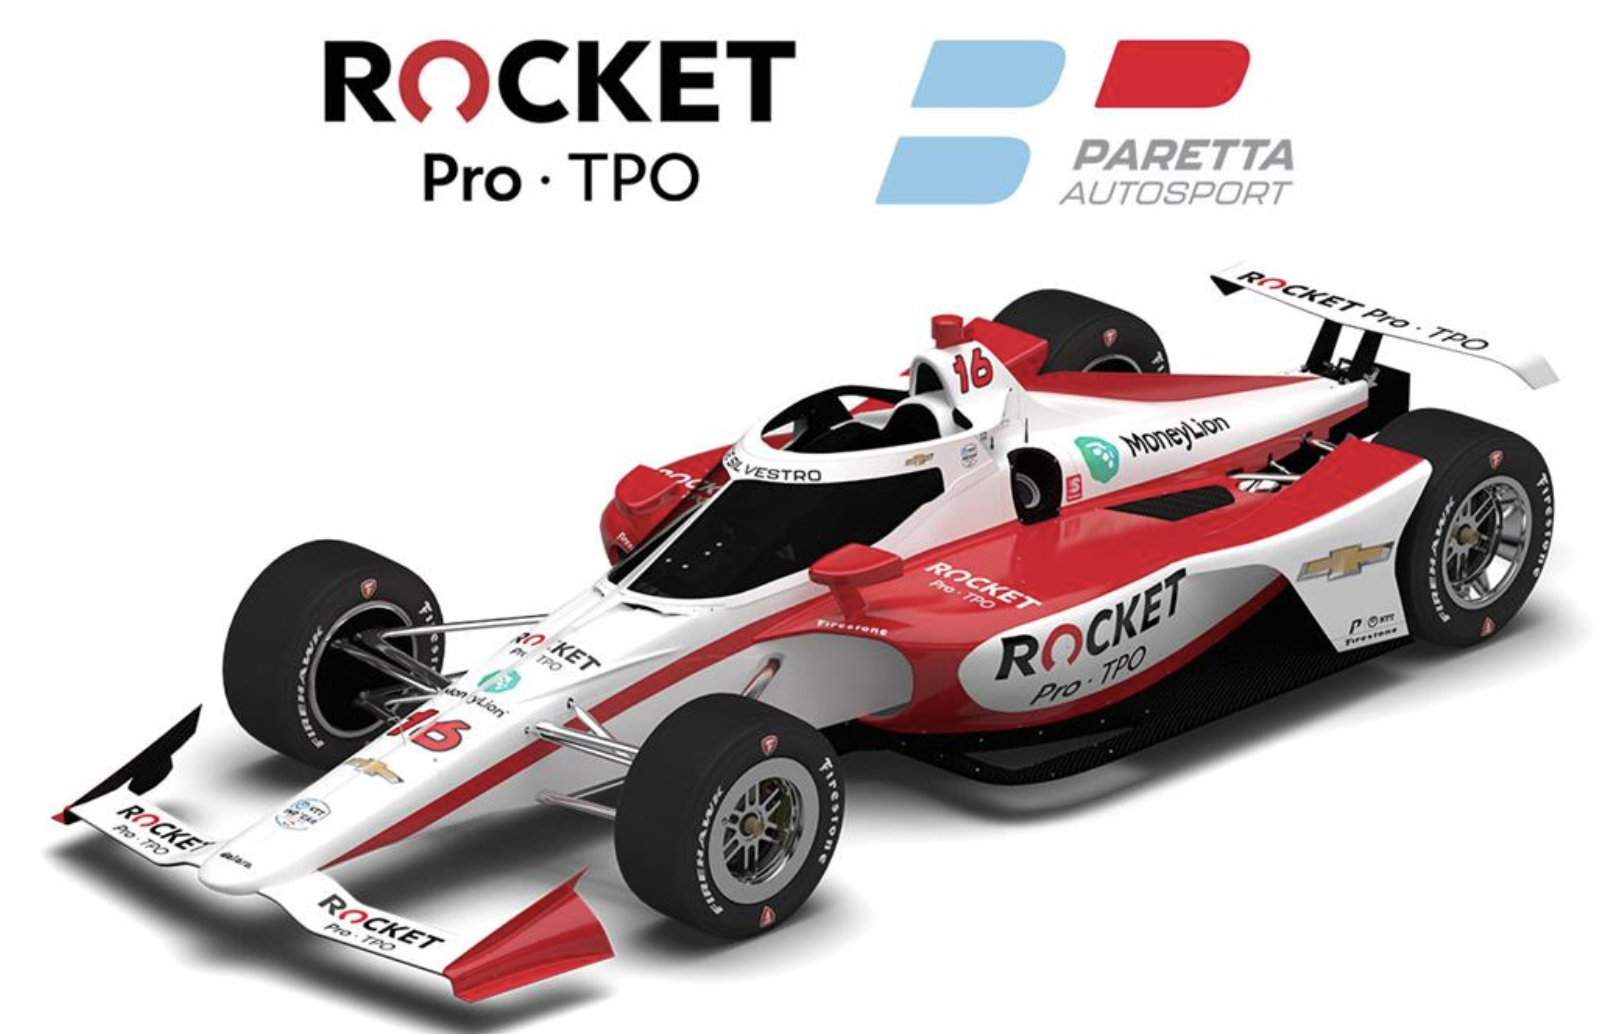 Rocket pro TPO Race Car Paretta Autosport